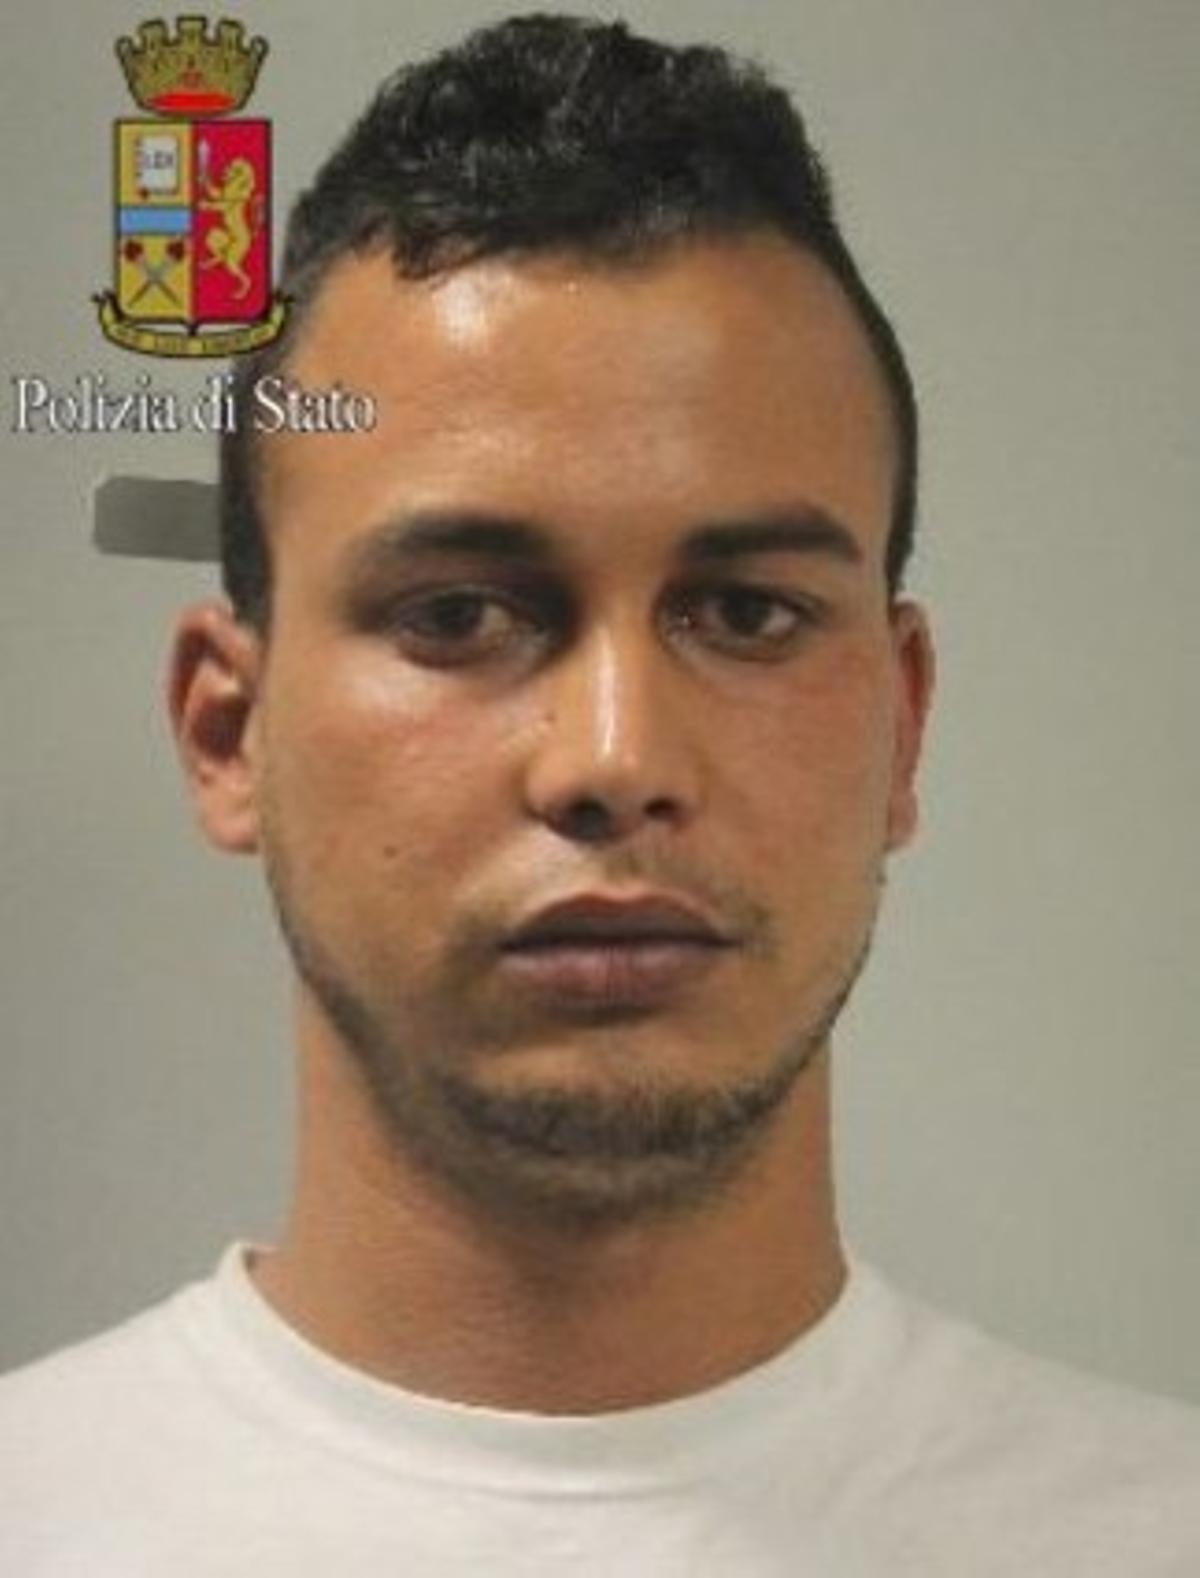 Toul Abdul-Majid, en una imatge difosa per la policia italiana.